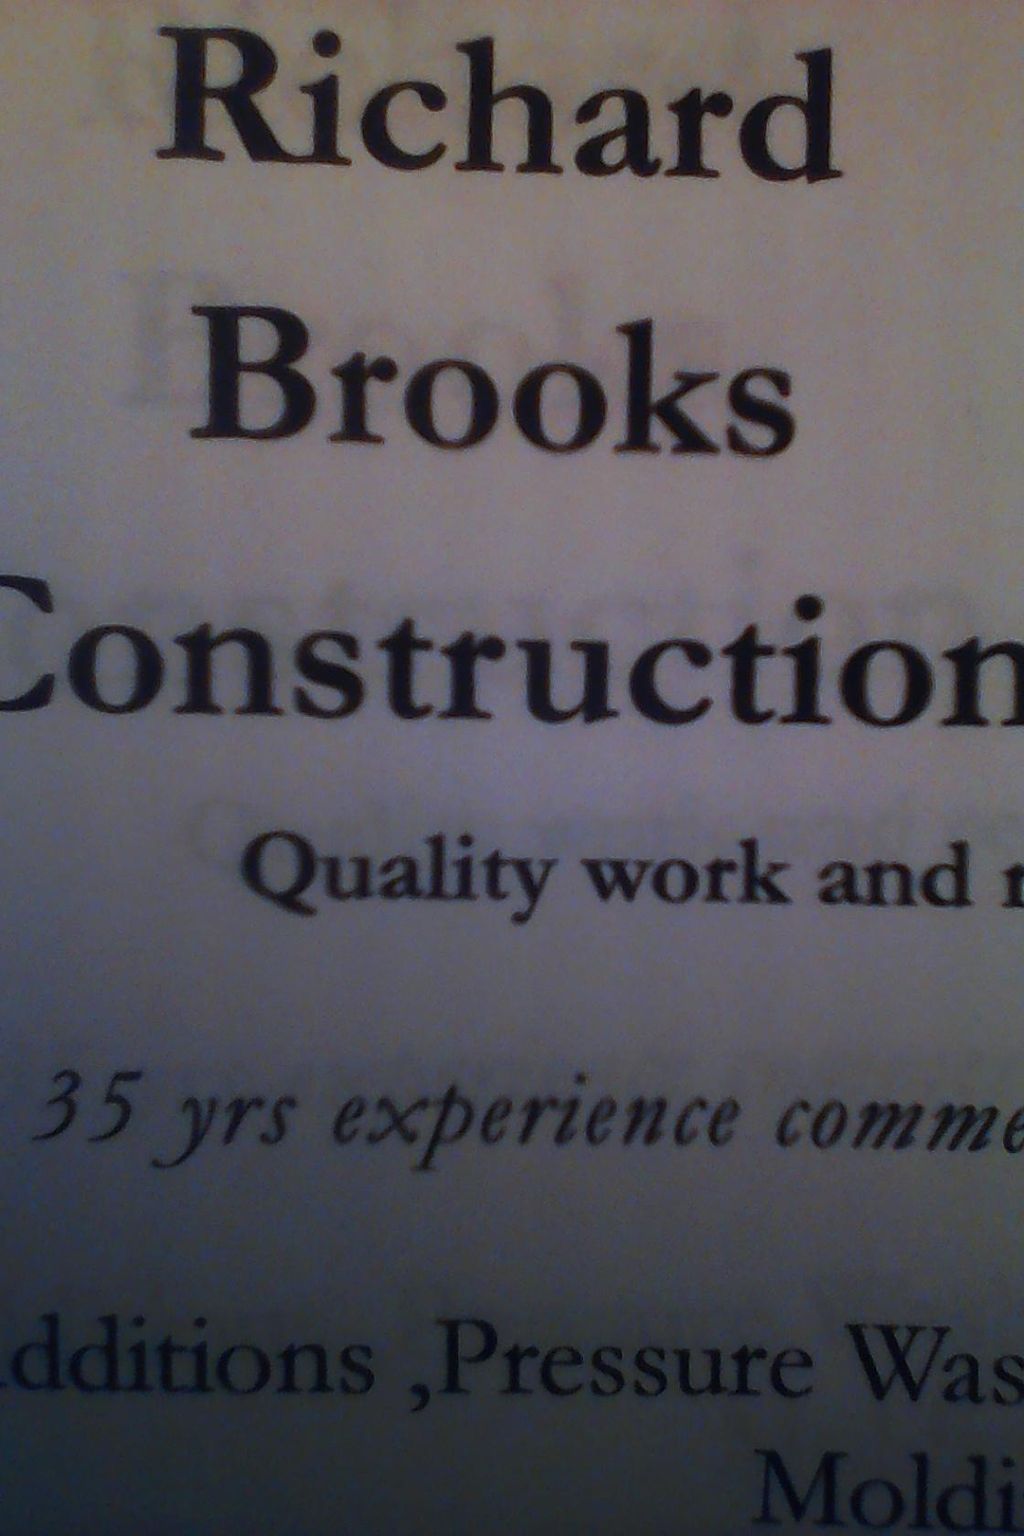 Richard Brooks Construction